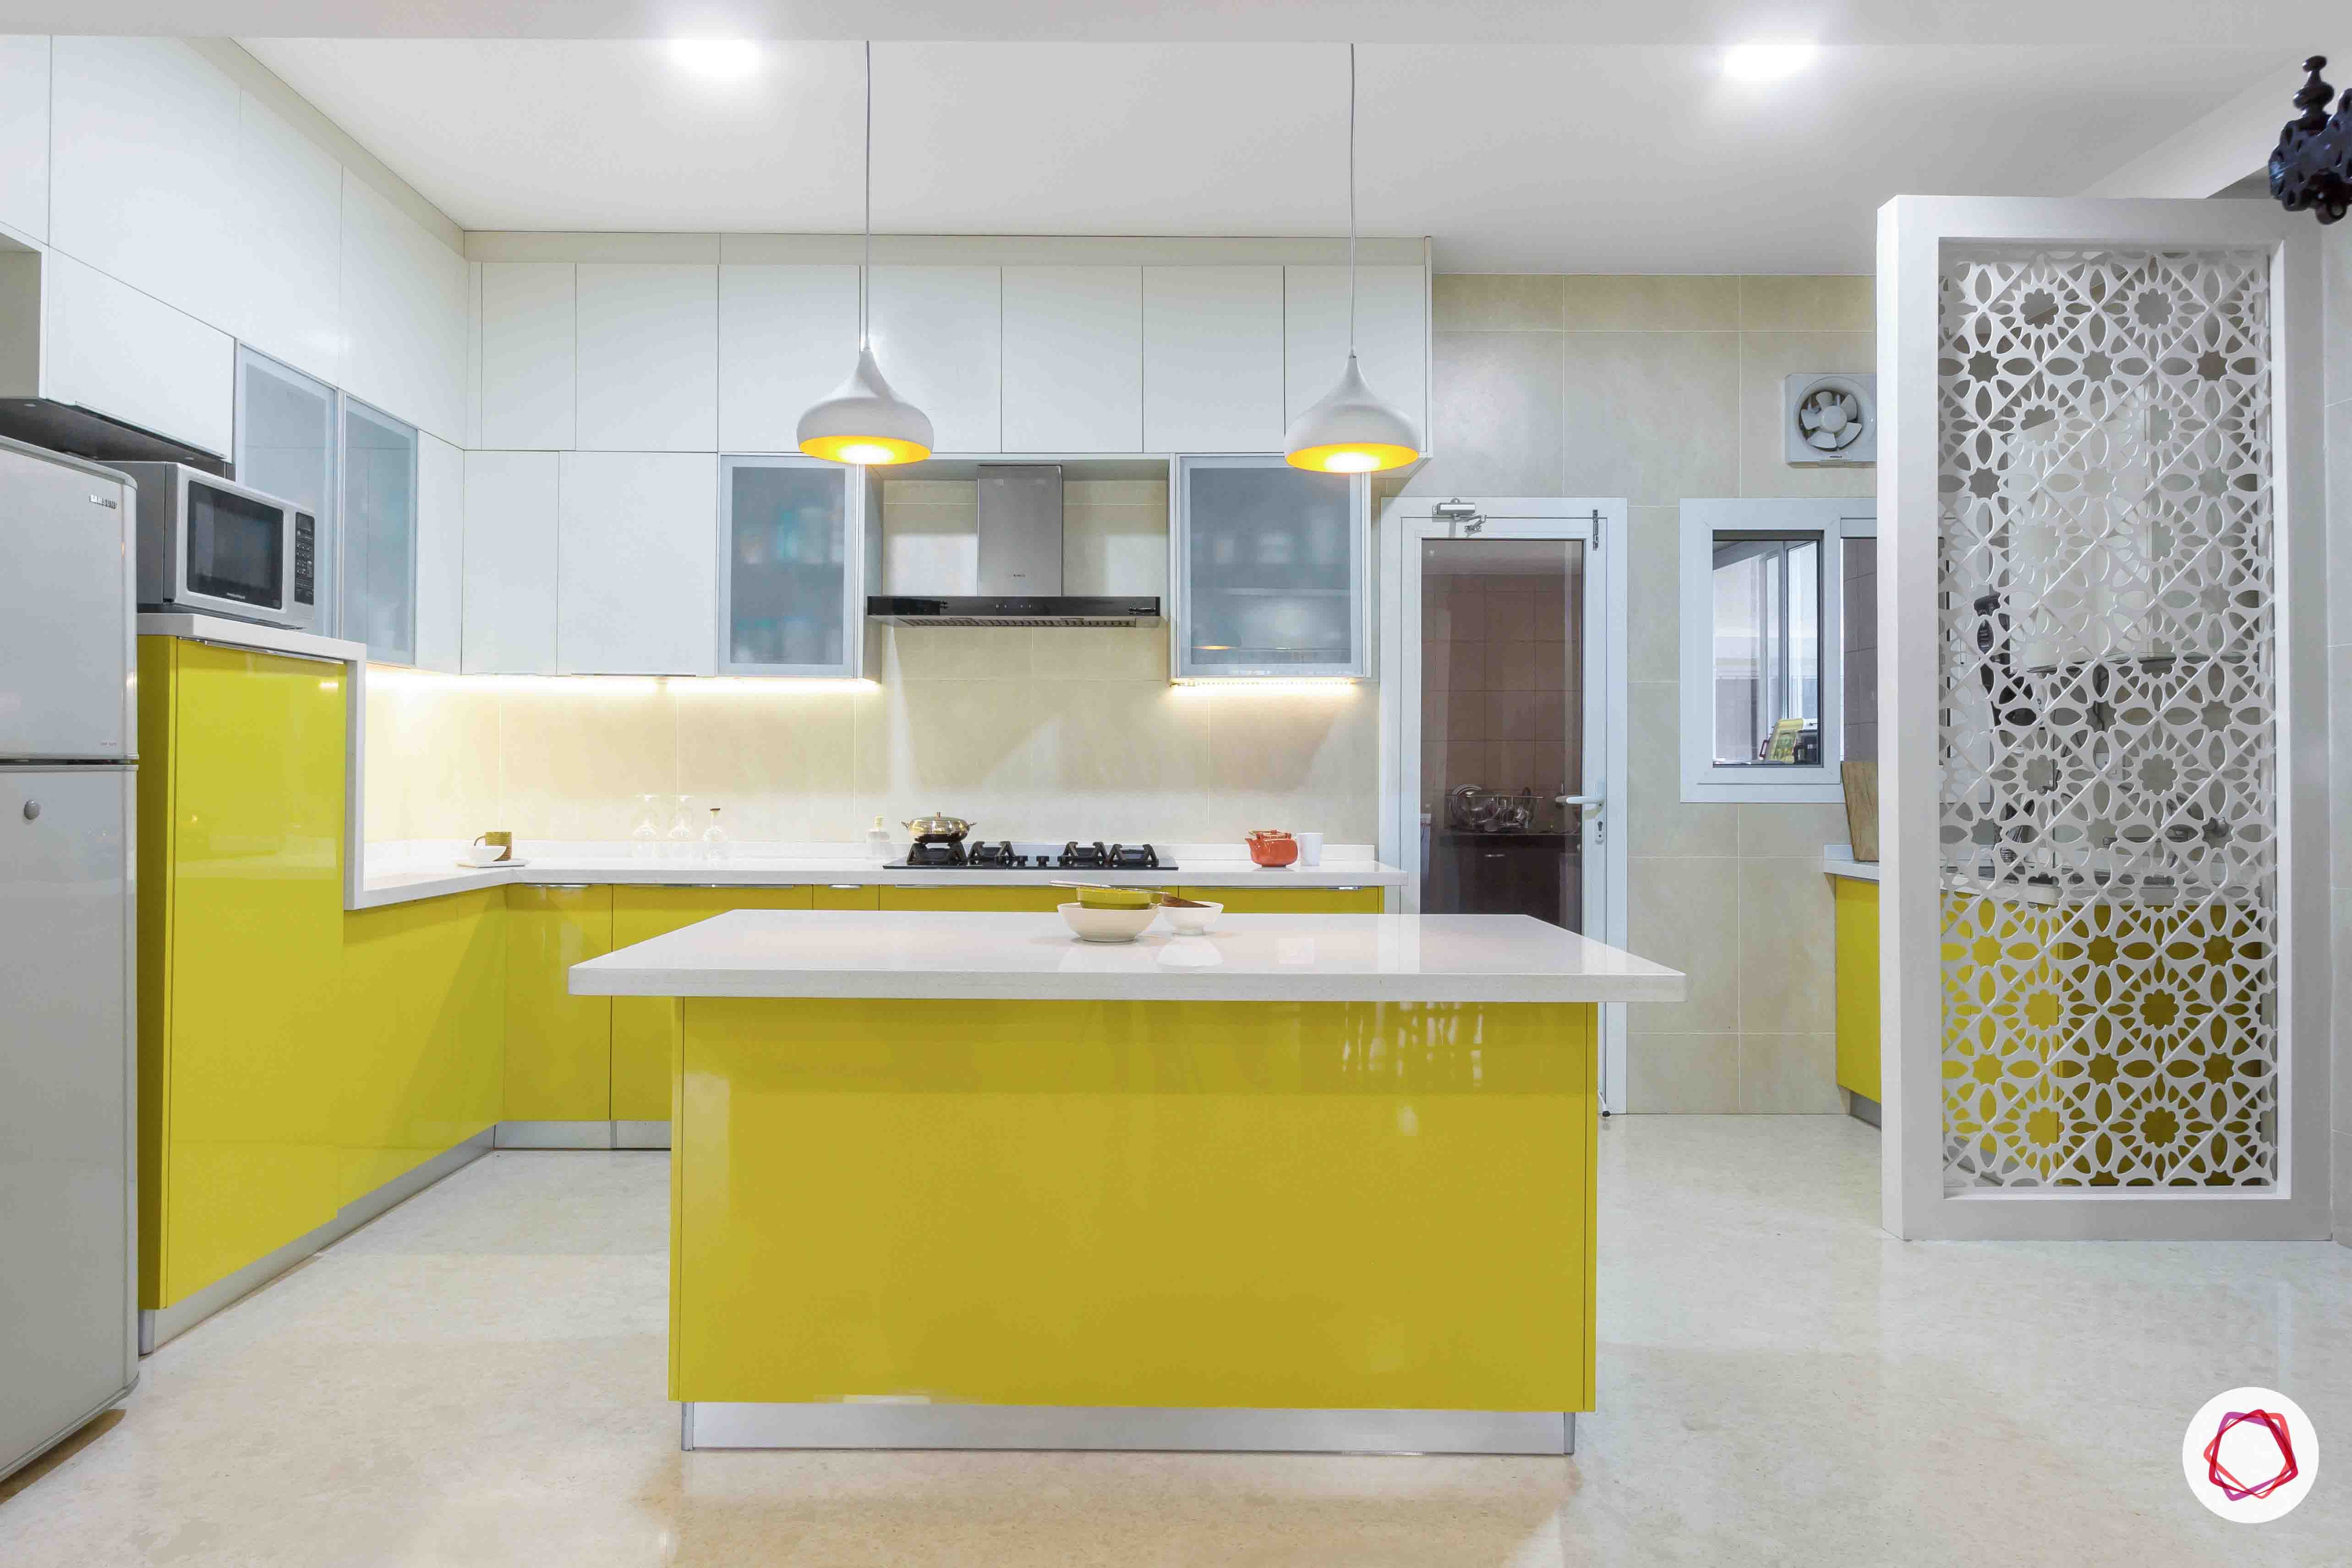 sobha forest view-modular kitchen design-breakfast counter-open kitchen-yellow cabinets-pendant lights